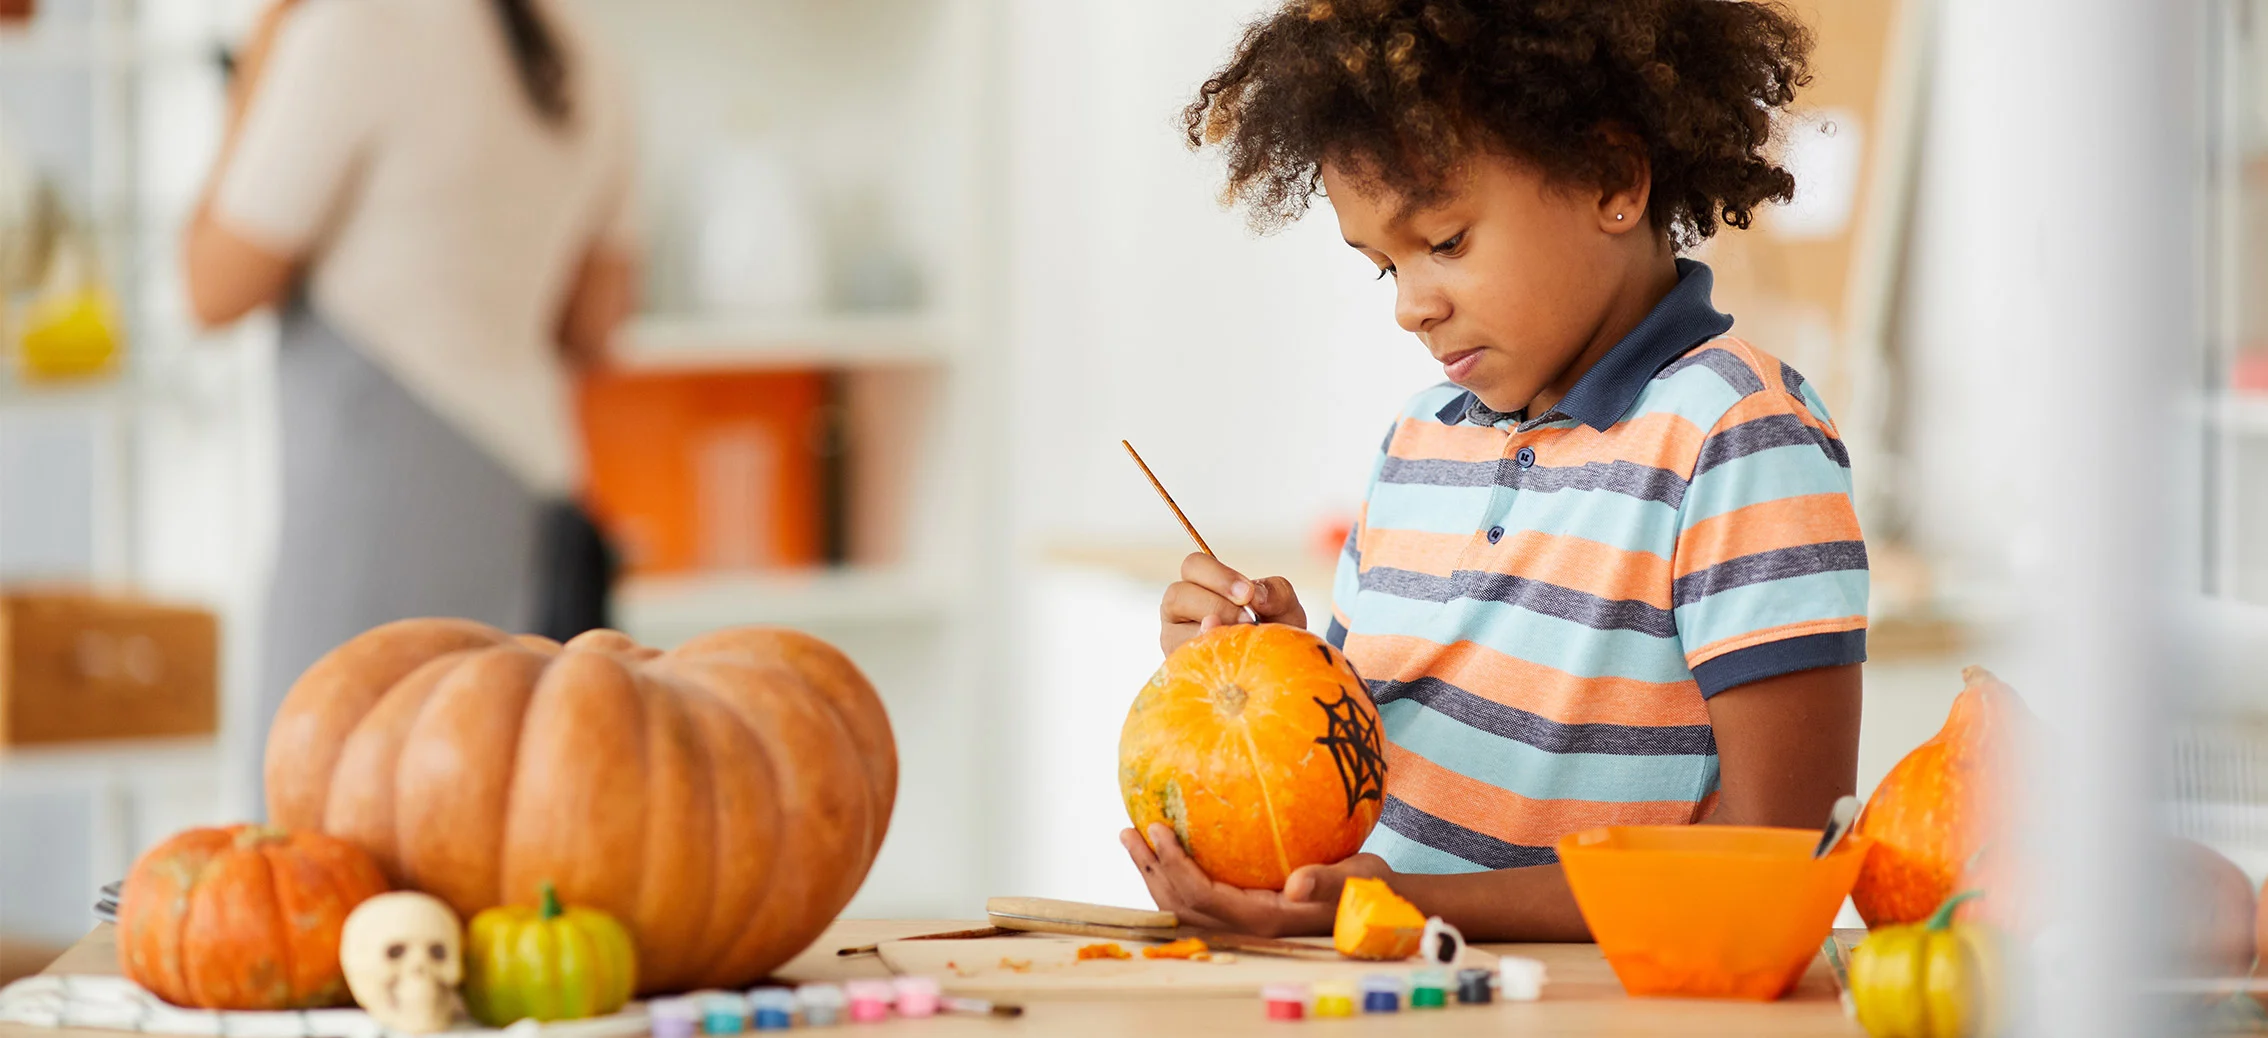 Young boy carving a pumpkin